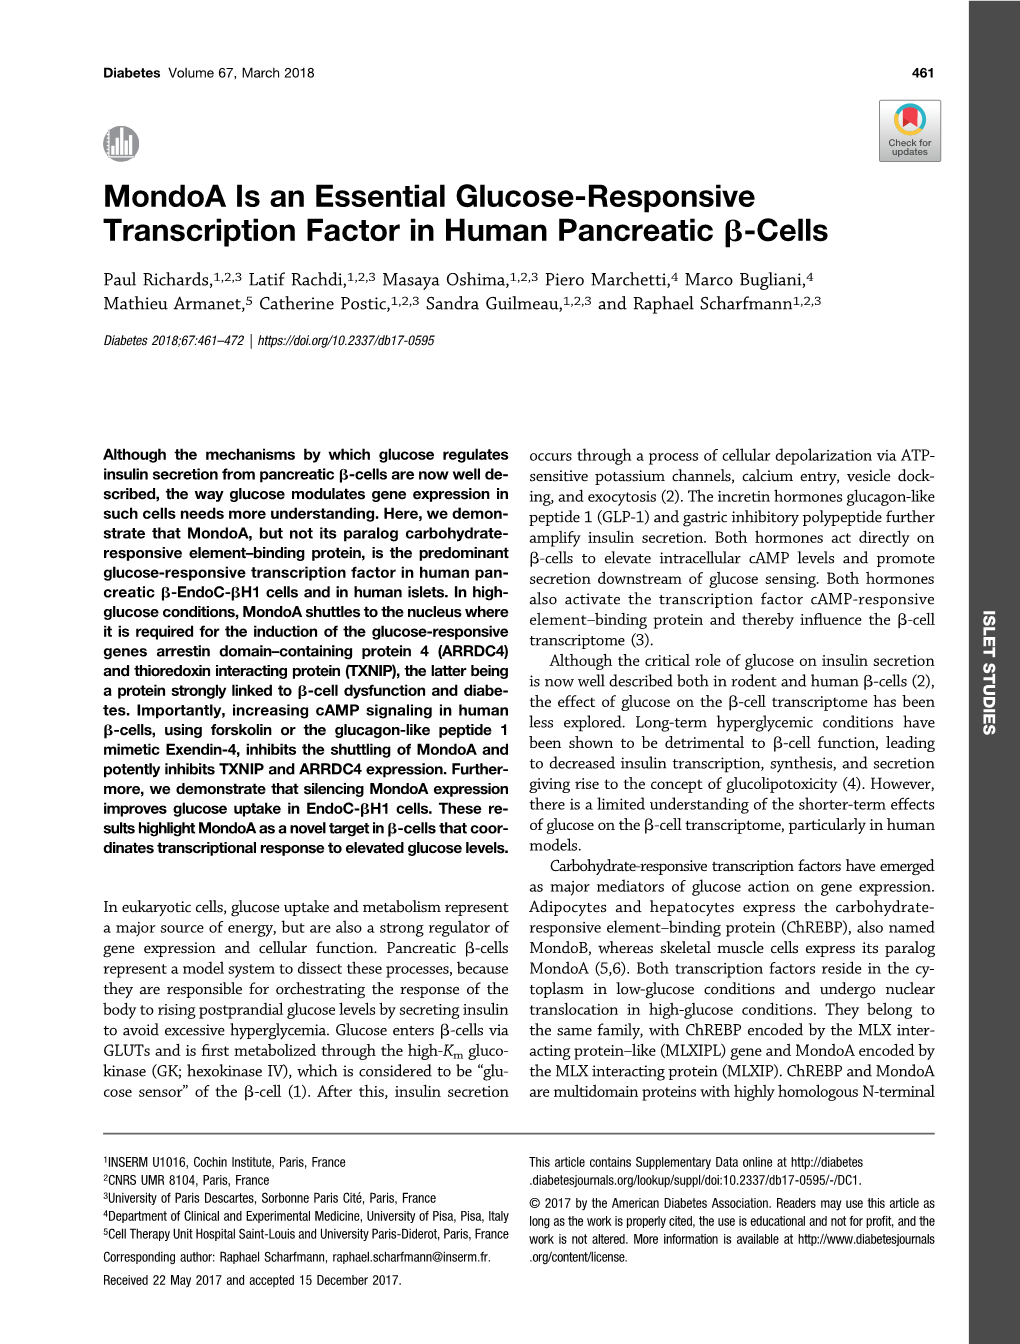 Mondoa Is an Essential Glucose-Responsive Transcription Factor in Human Pancreatic B-Cells